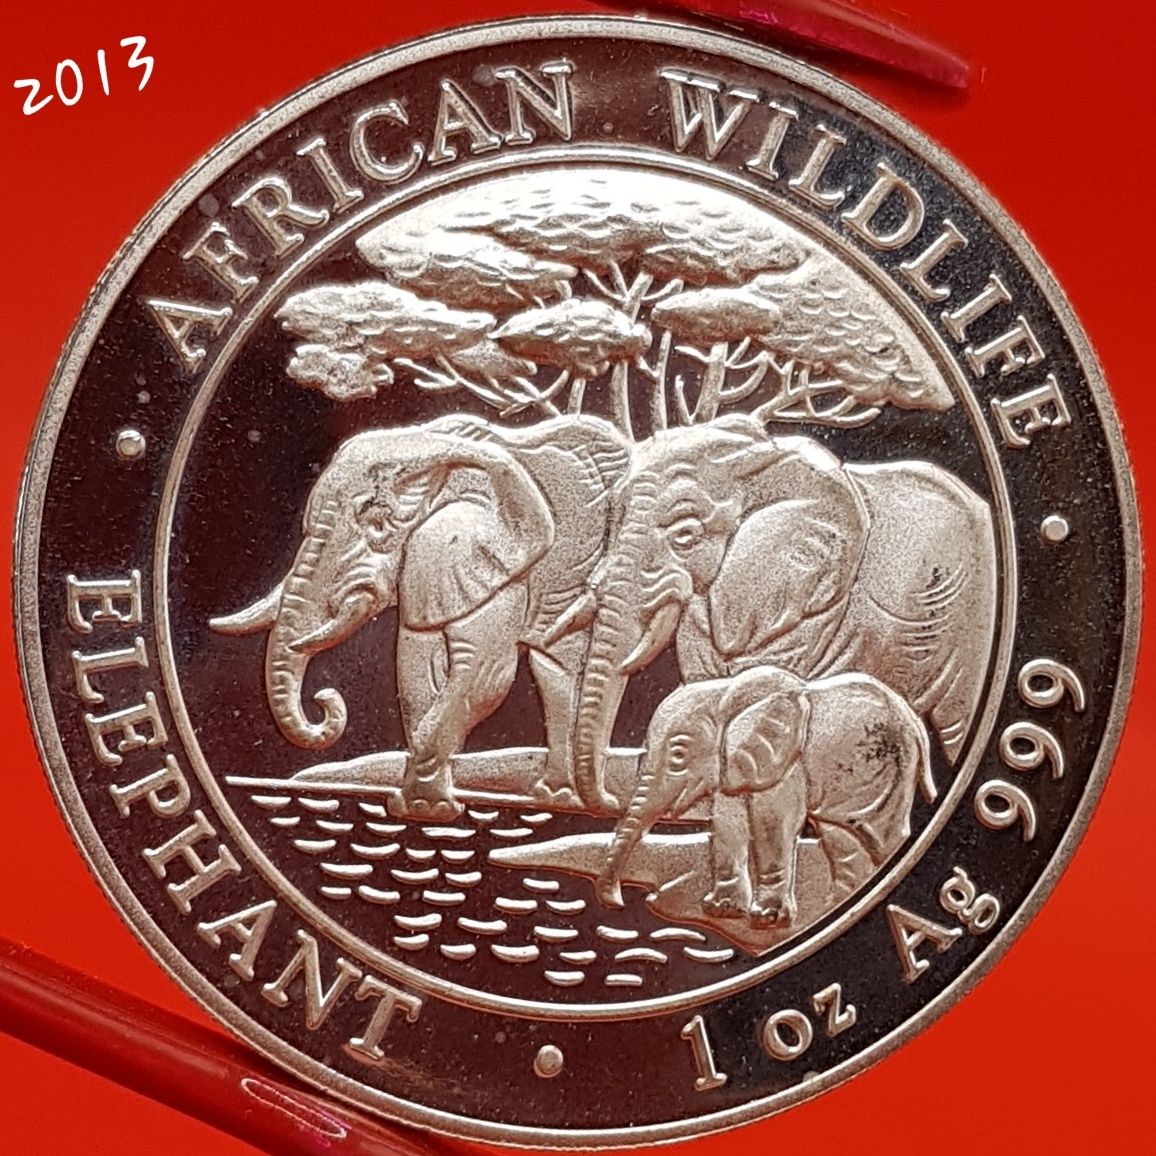 Somalia Elefantul 2011-2024 monede lingou argint 999